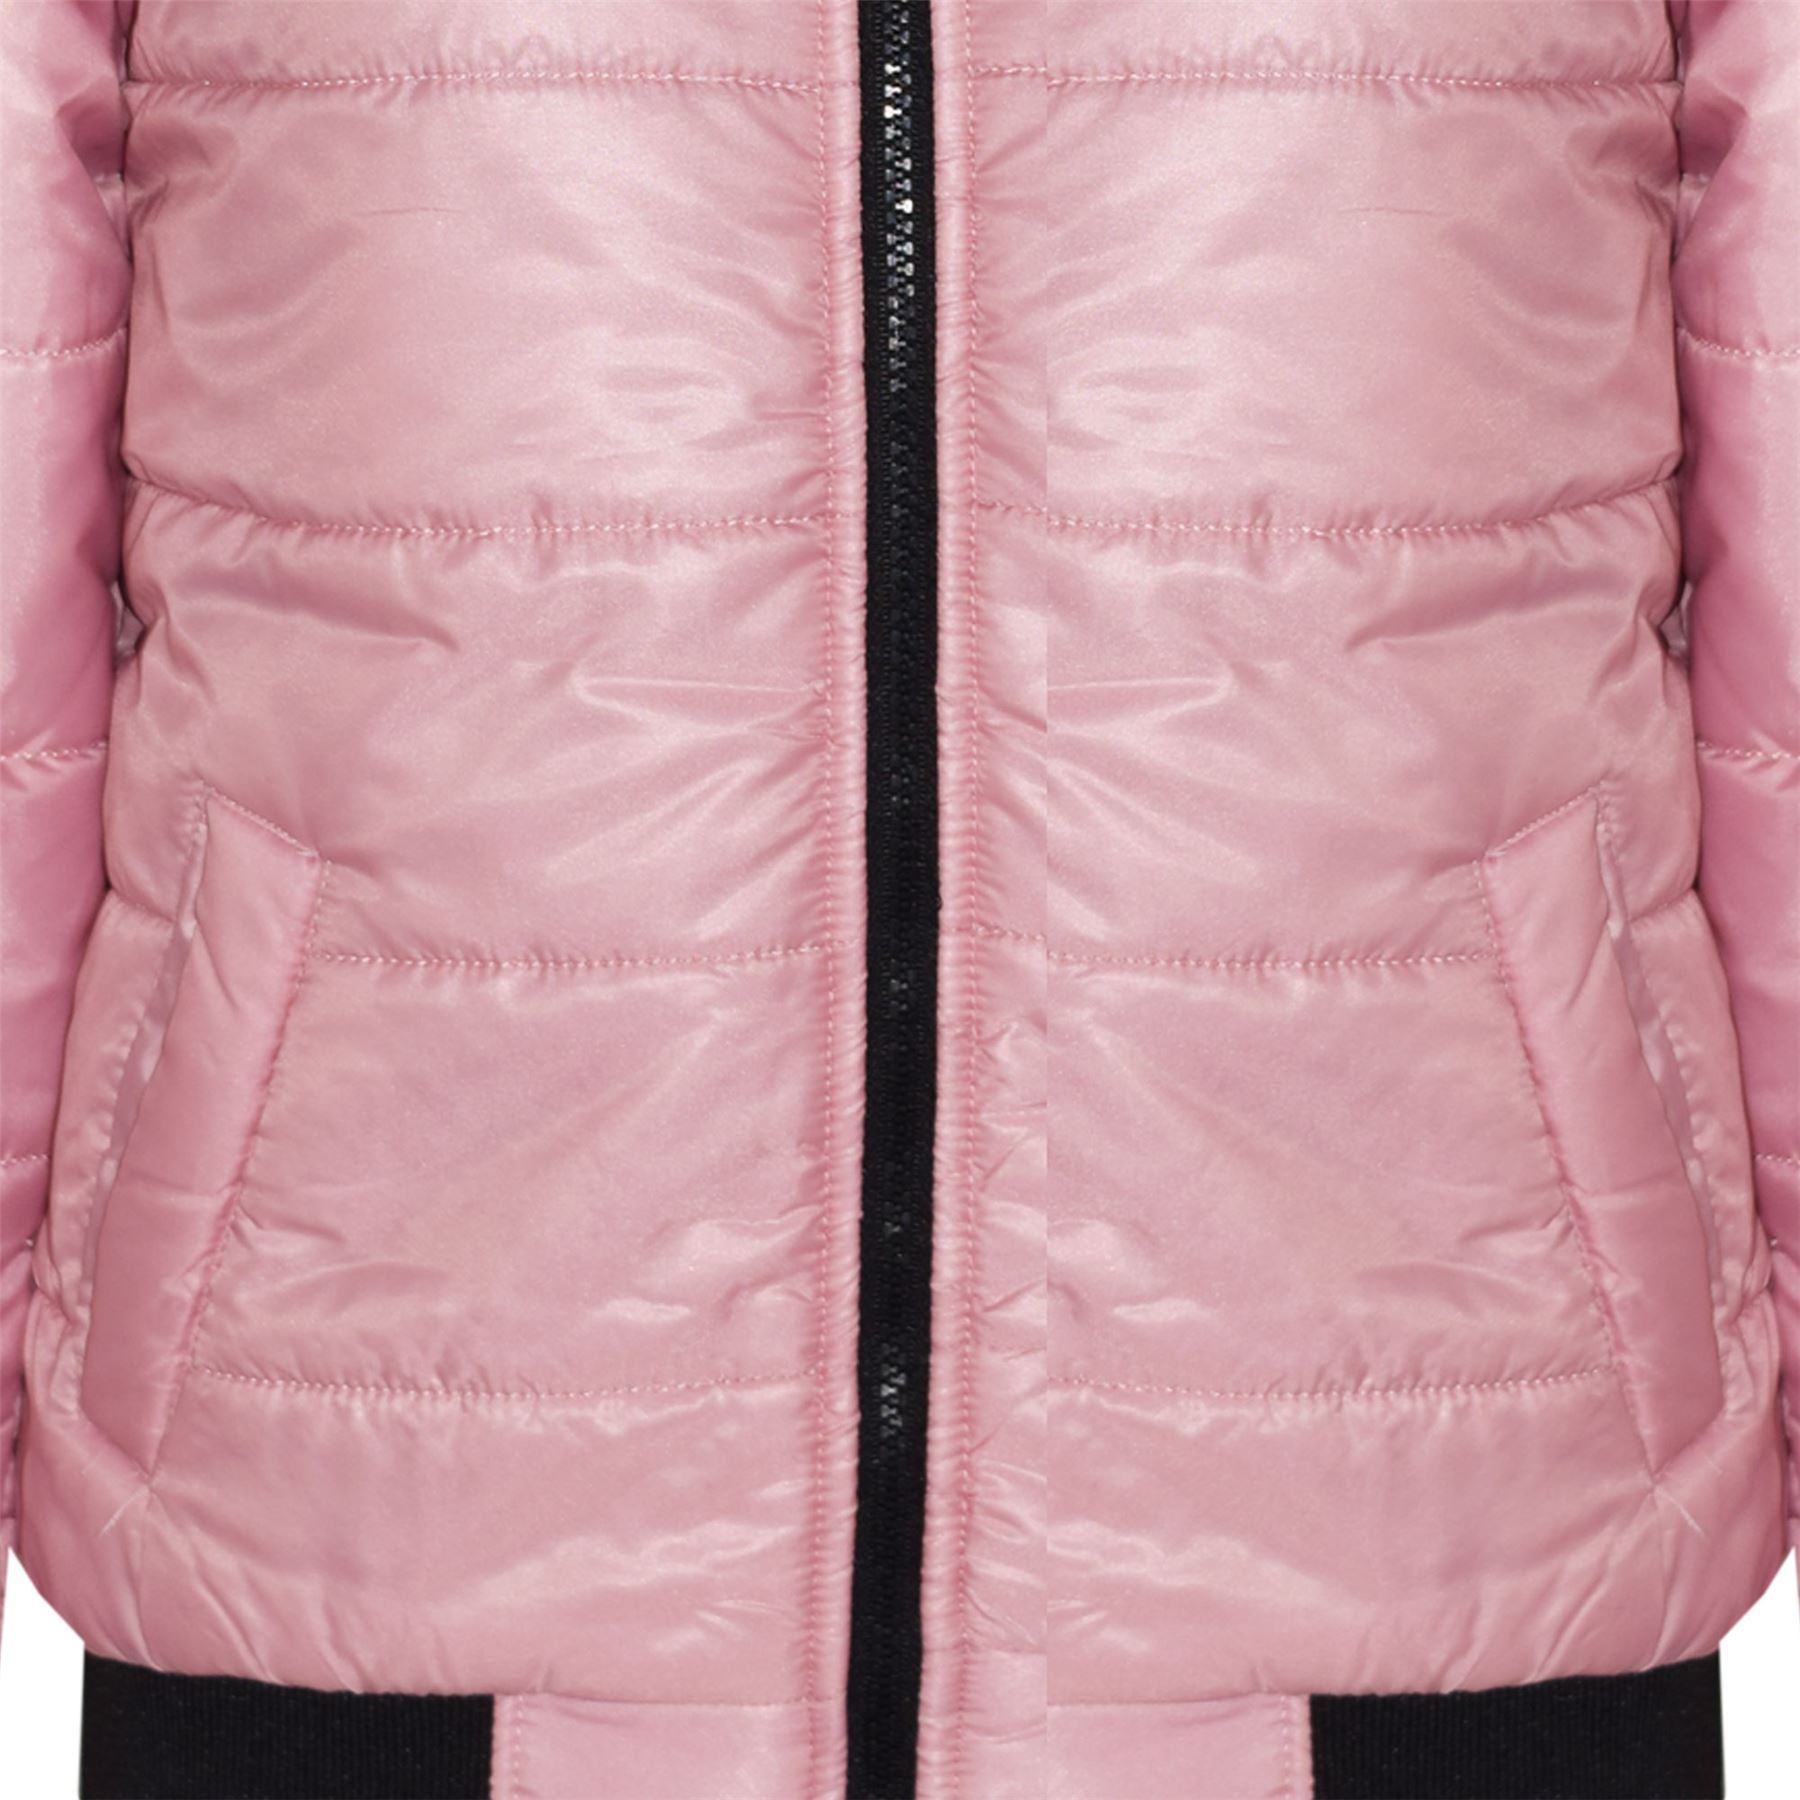 Kids Girls Boys Fux Fur Baby Pink Hooded Puffer Jacket